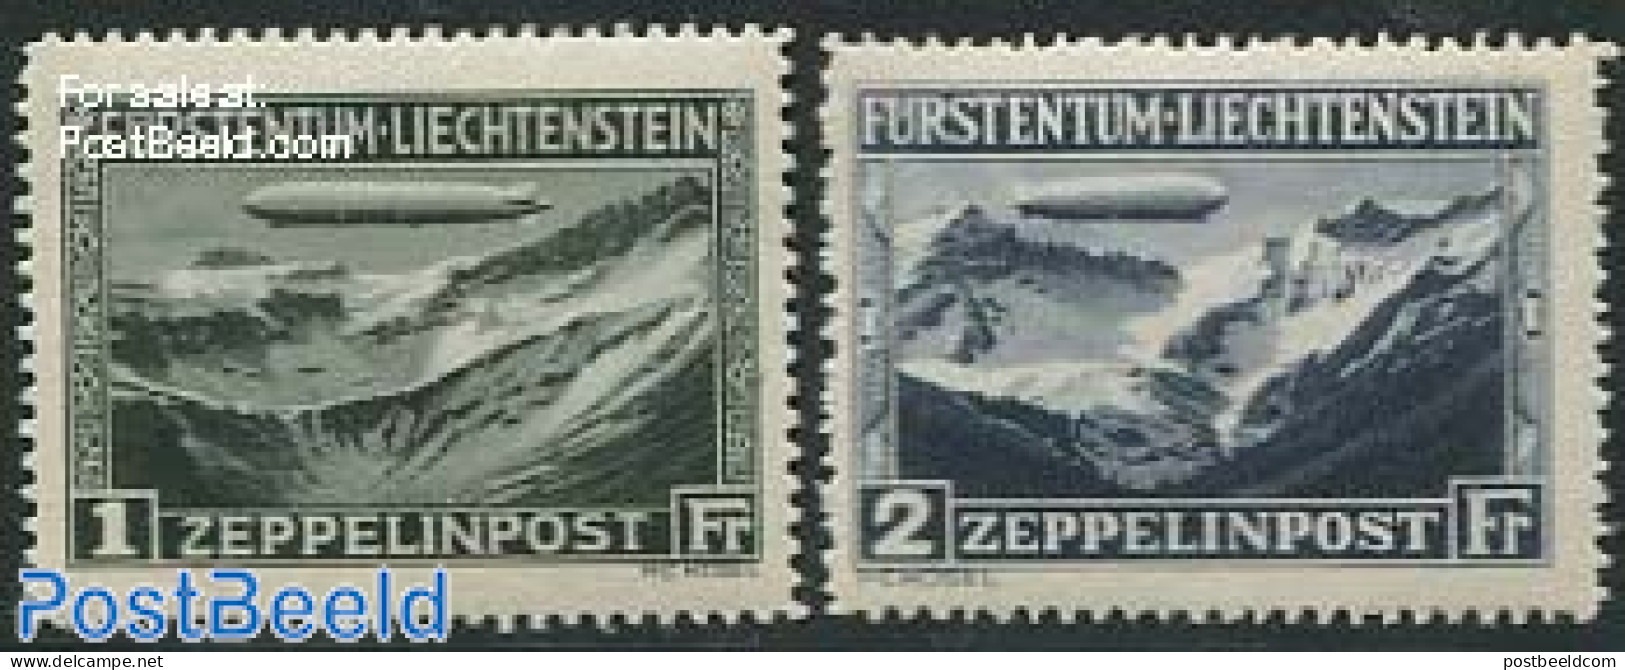 Liechtenstein 1931 Graf Zeppelin 2v, Unused (hinged), Transport - Zeppelins - Unused Stamps